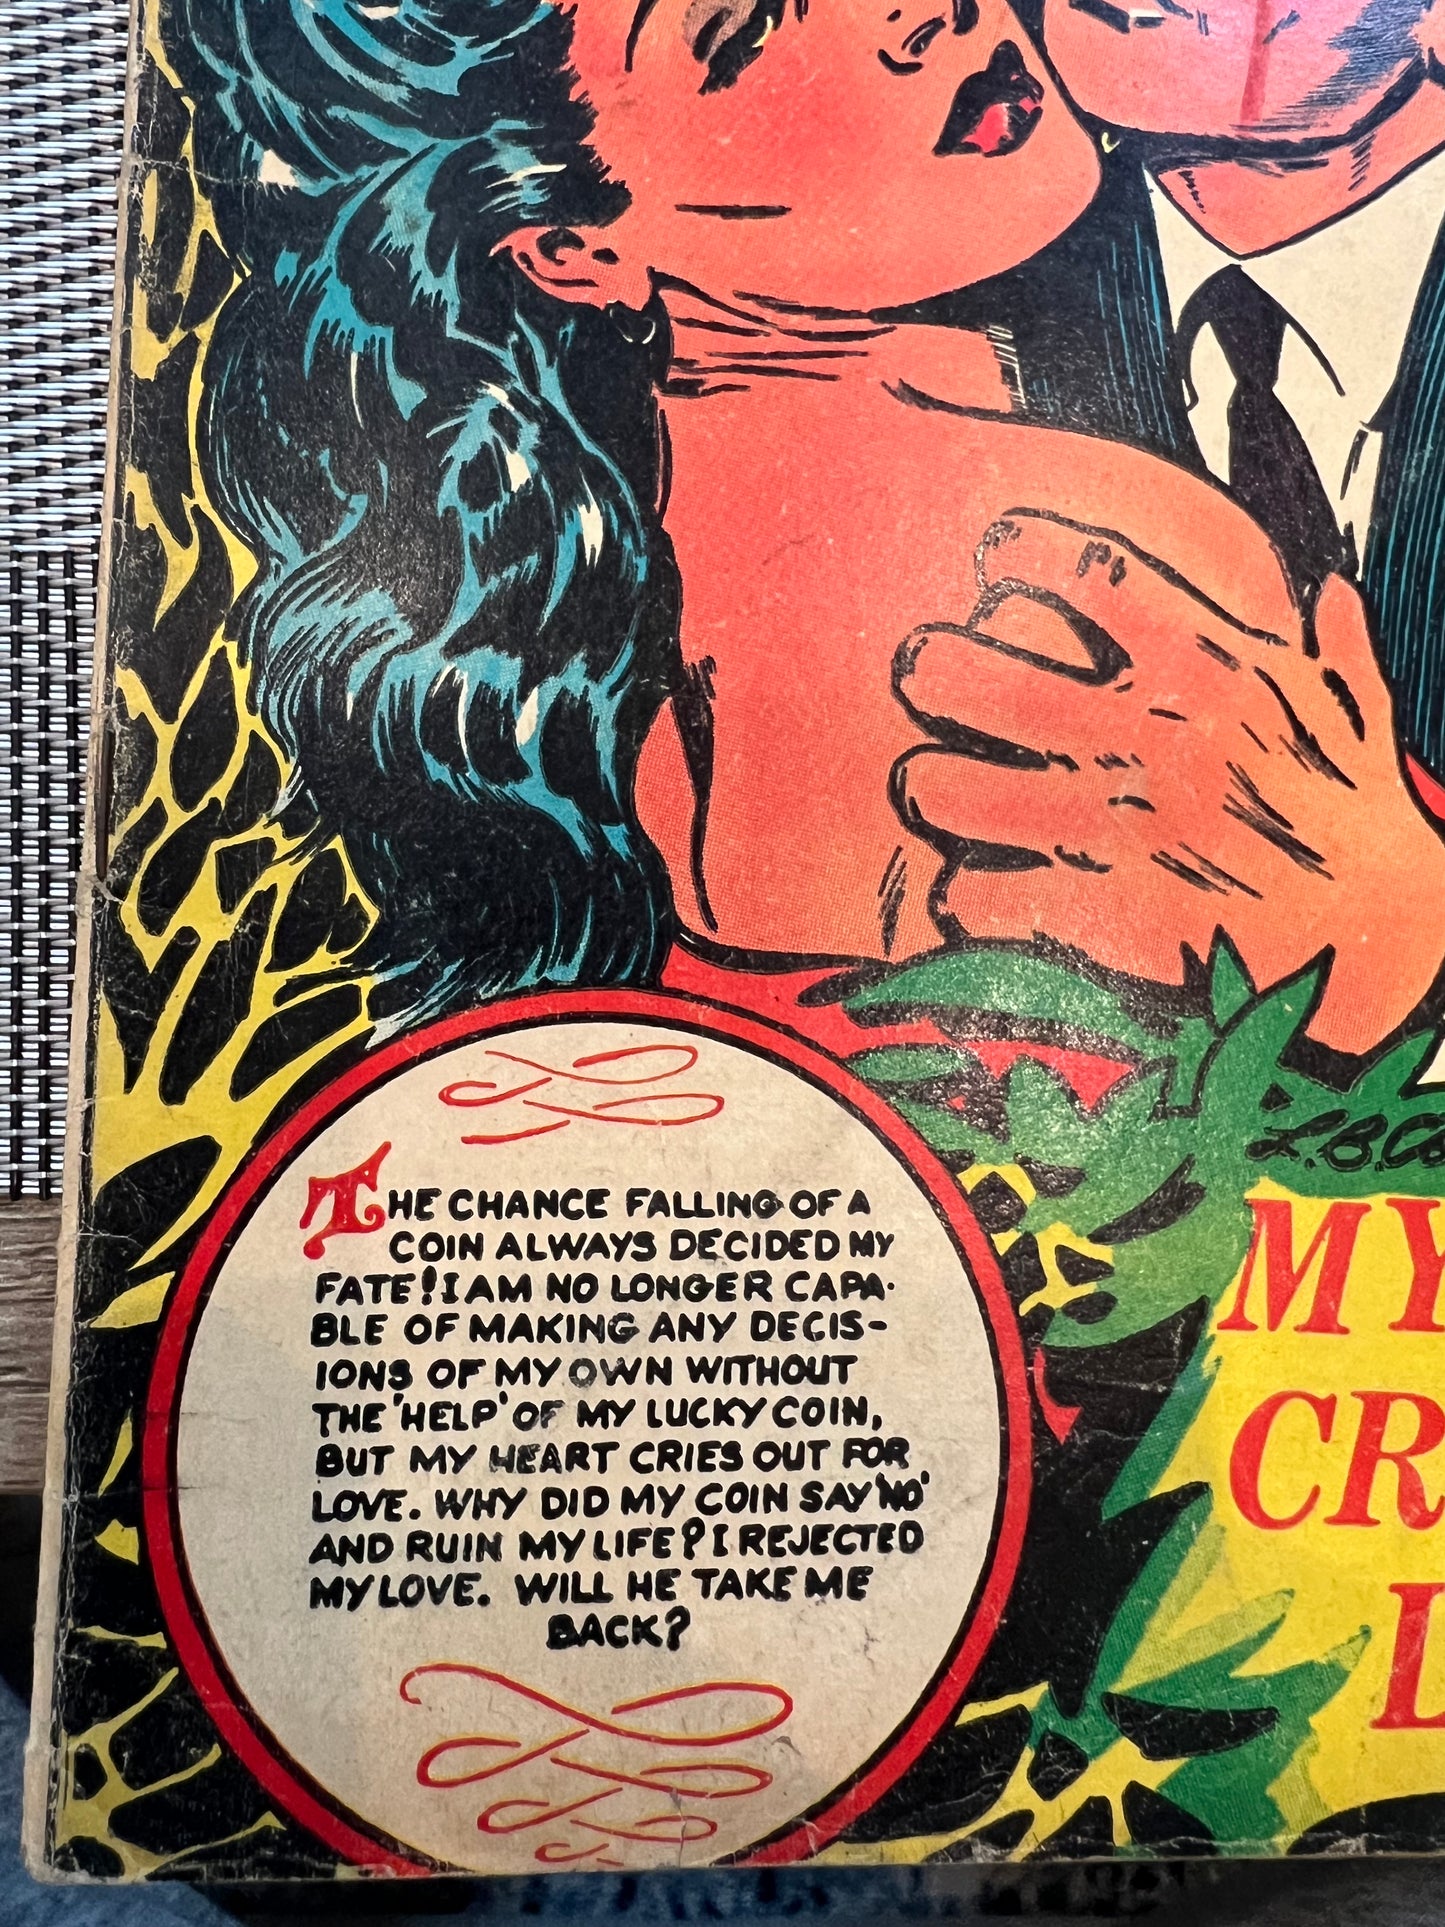 Confessions Of Romance #10 (Star, 1954) Golden Age L.B. Cole Cover